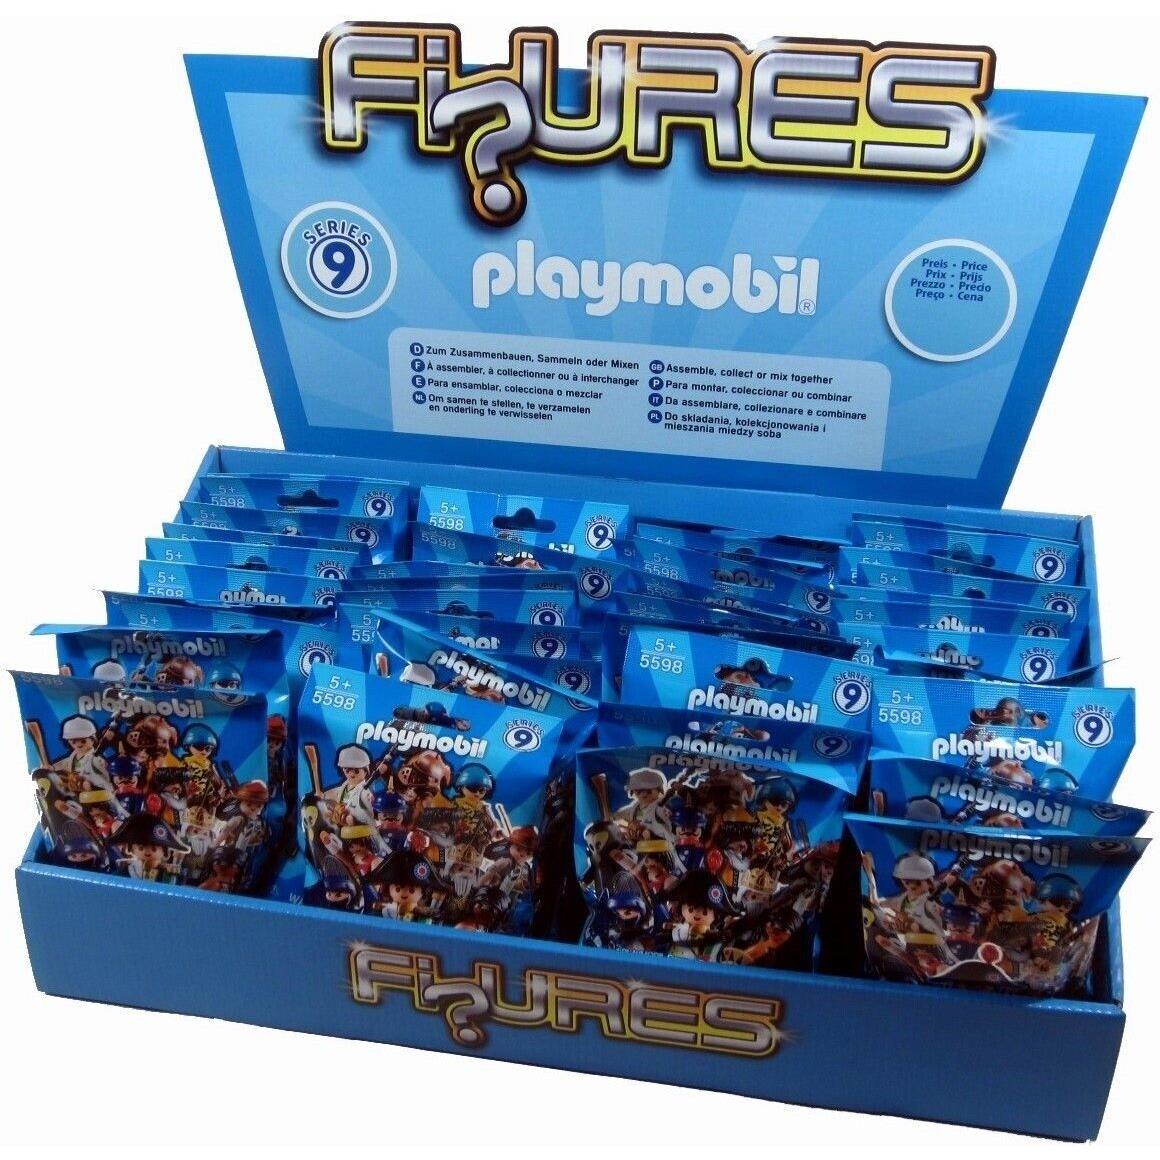 Playmobil 5598 Blue Boys Series 9 Mini Figure Case of 48 Mystery Blind Bags